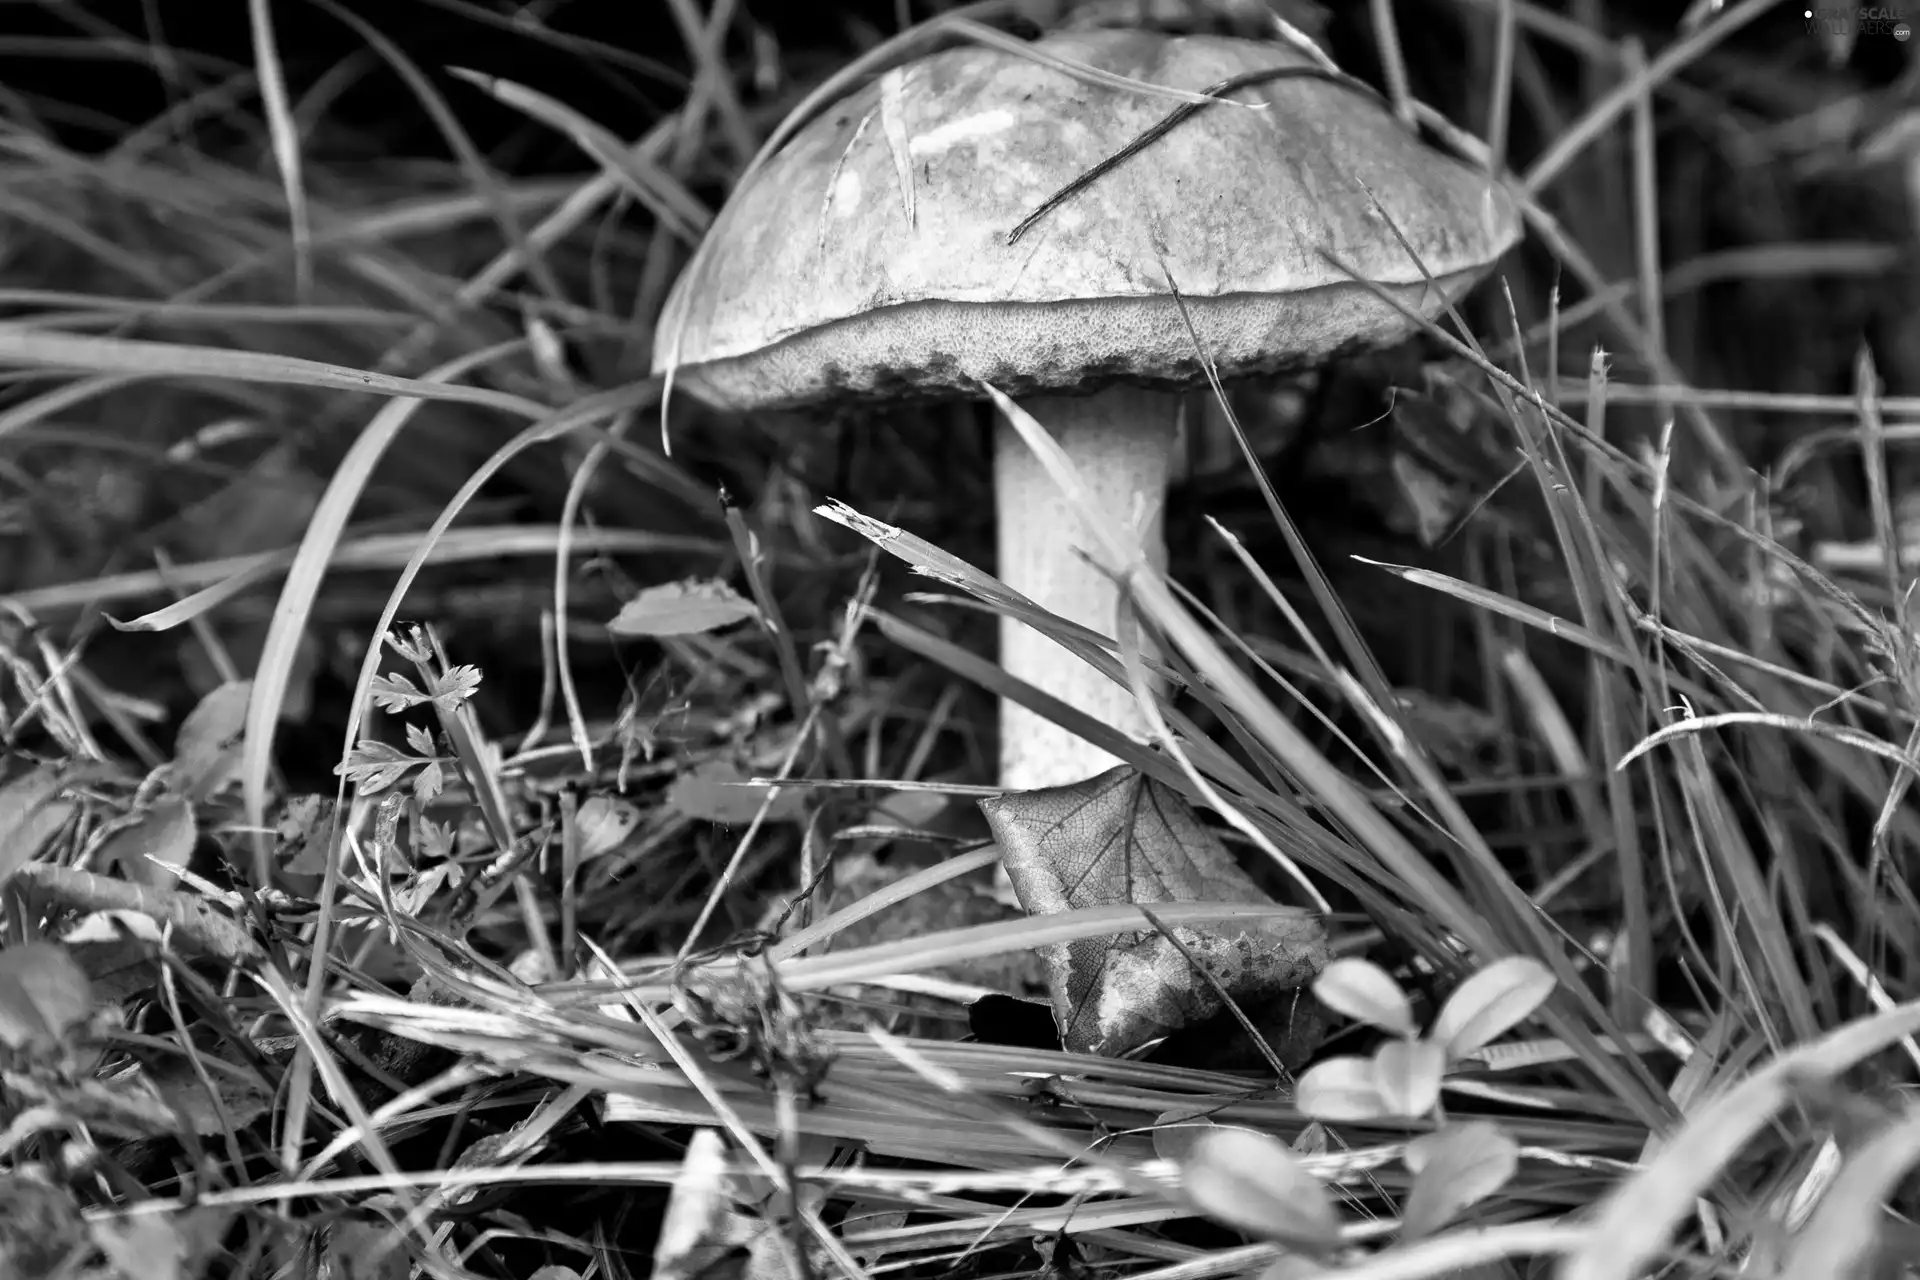 leaf, Mushrooms, grass